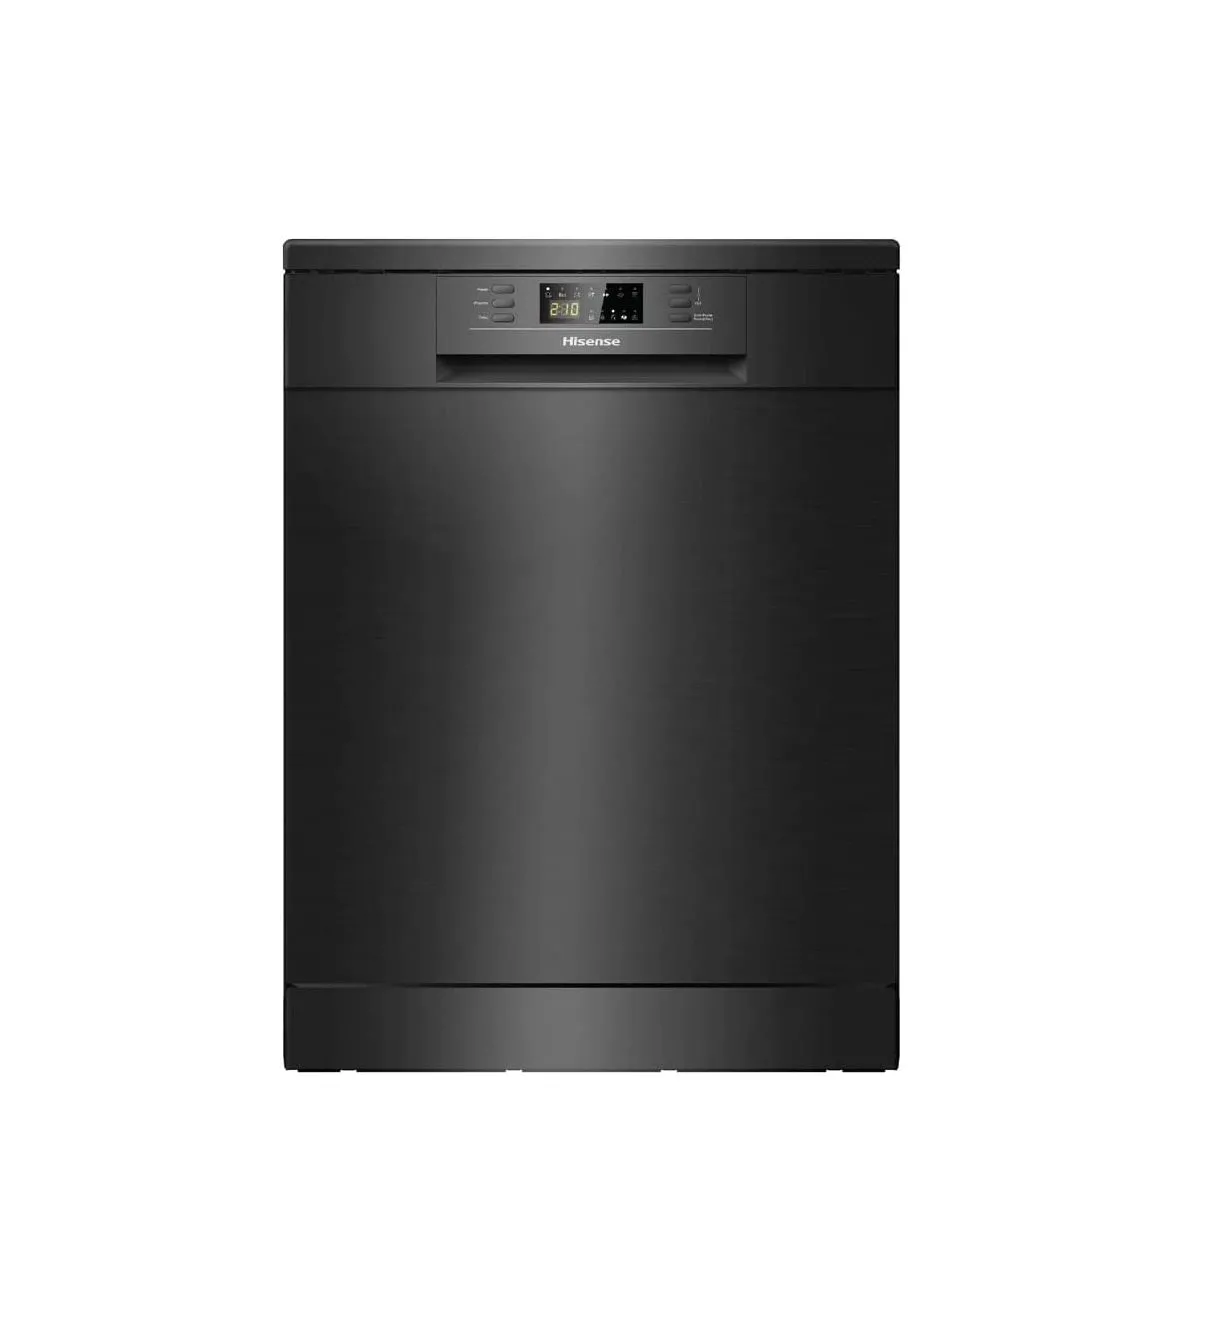 Hisense Dishwasher 14 Place Settings 6 Programs With Eco Black Model H14DB | 1 Year Brand Warranty.